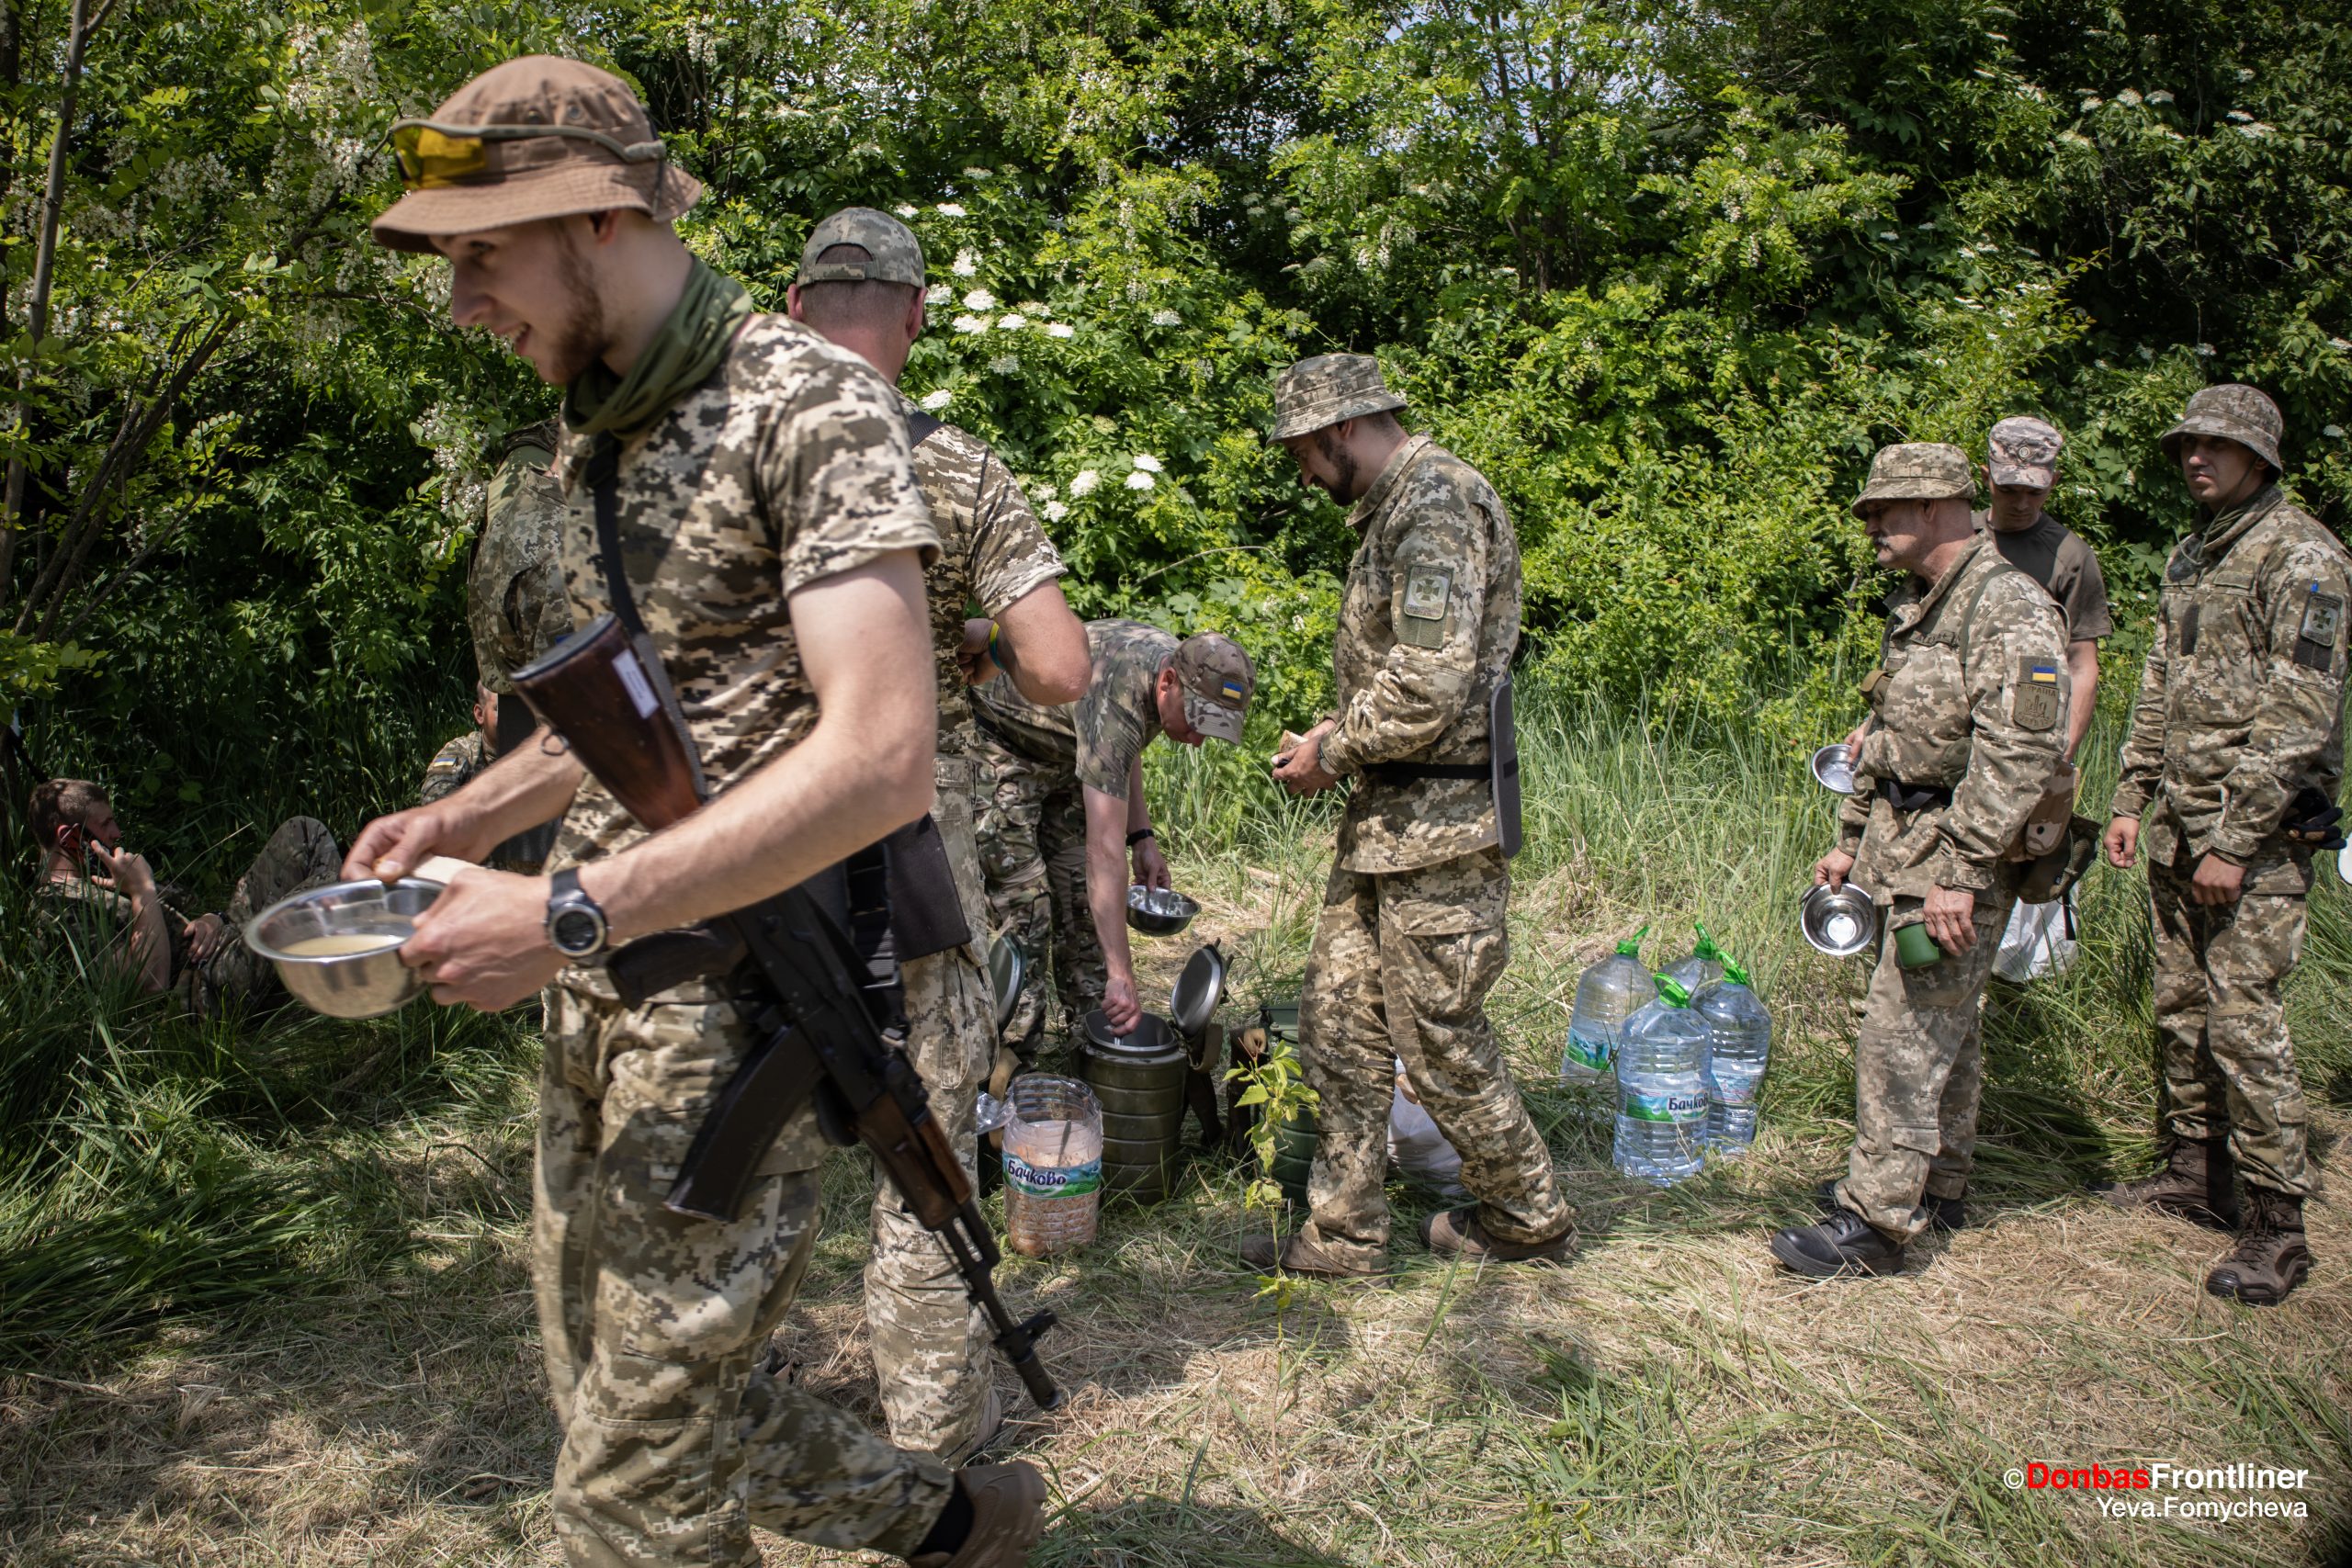 Donbas Frontliner / Після "штурму" - обід